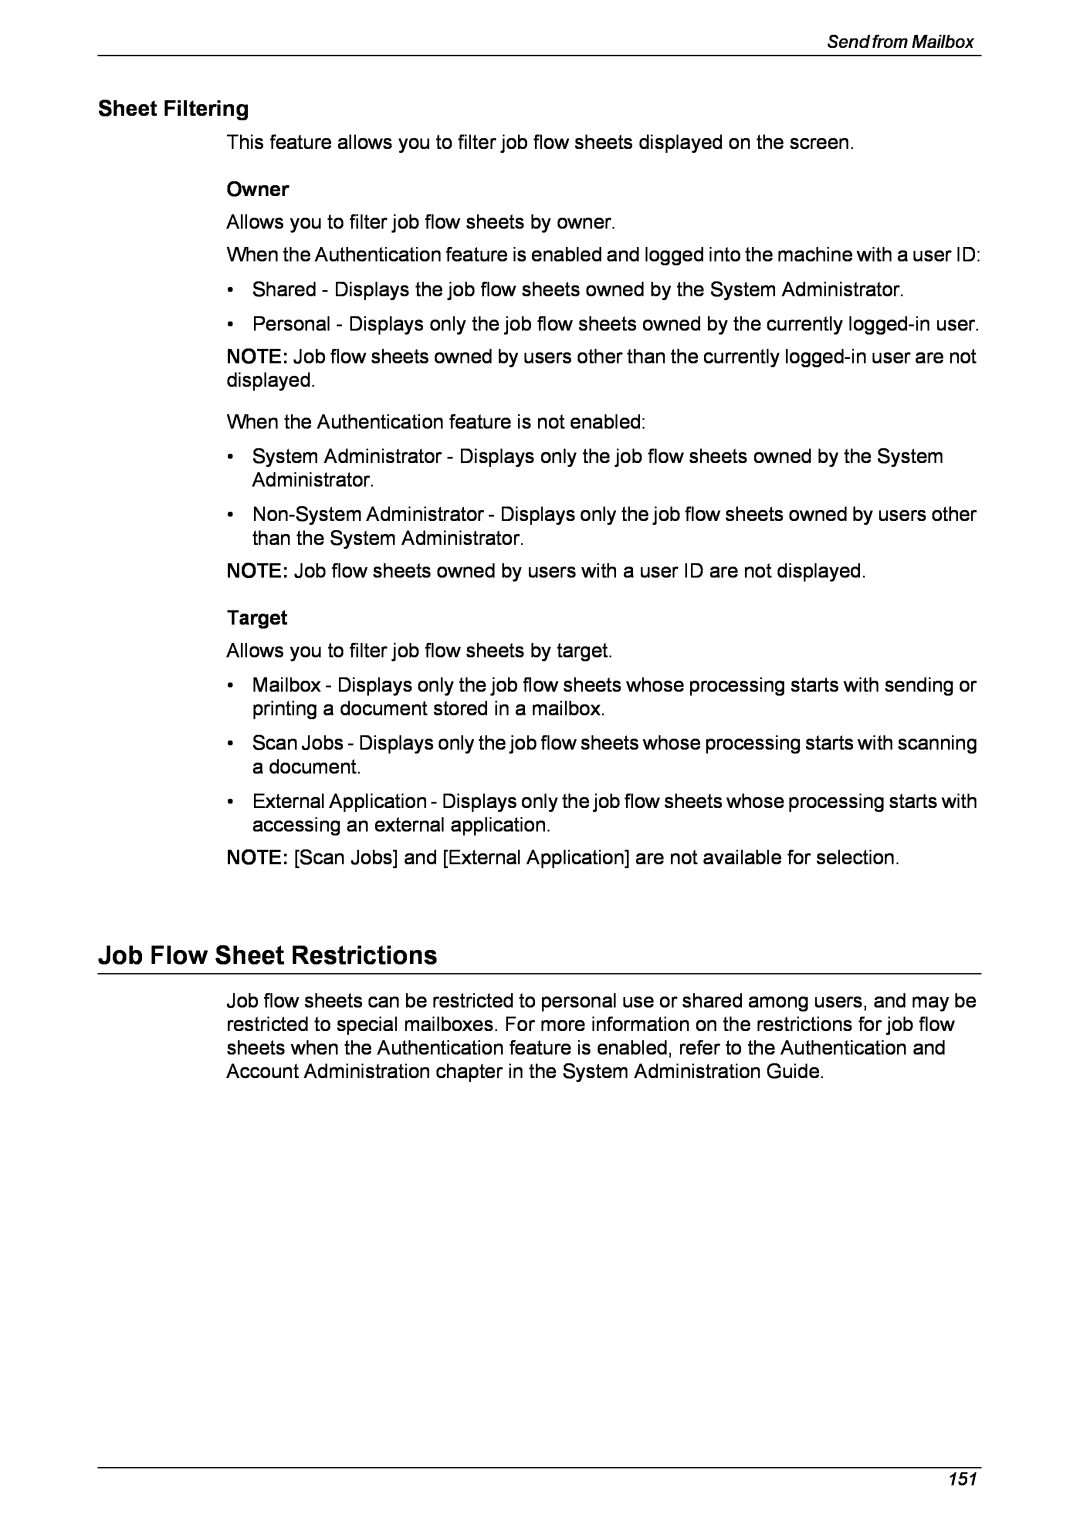 Xerox 5230 manual Job Flow Sheet Restrictions, Sheet Filtering, Owner, Target 